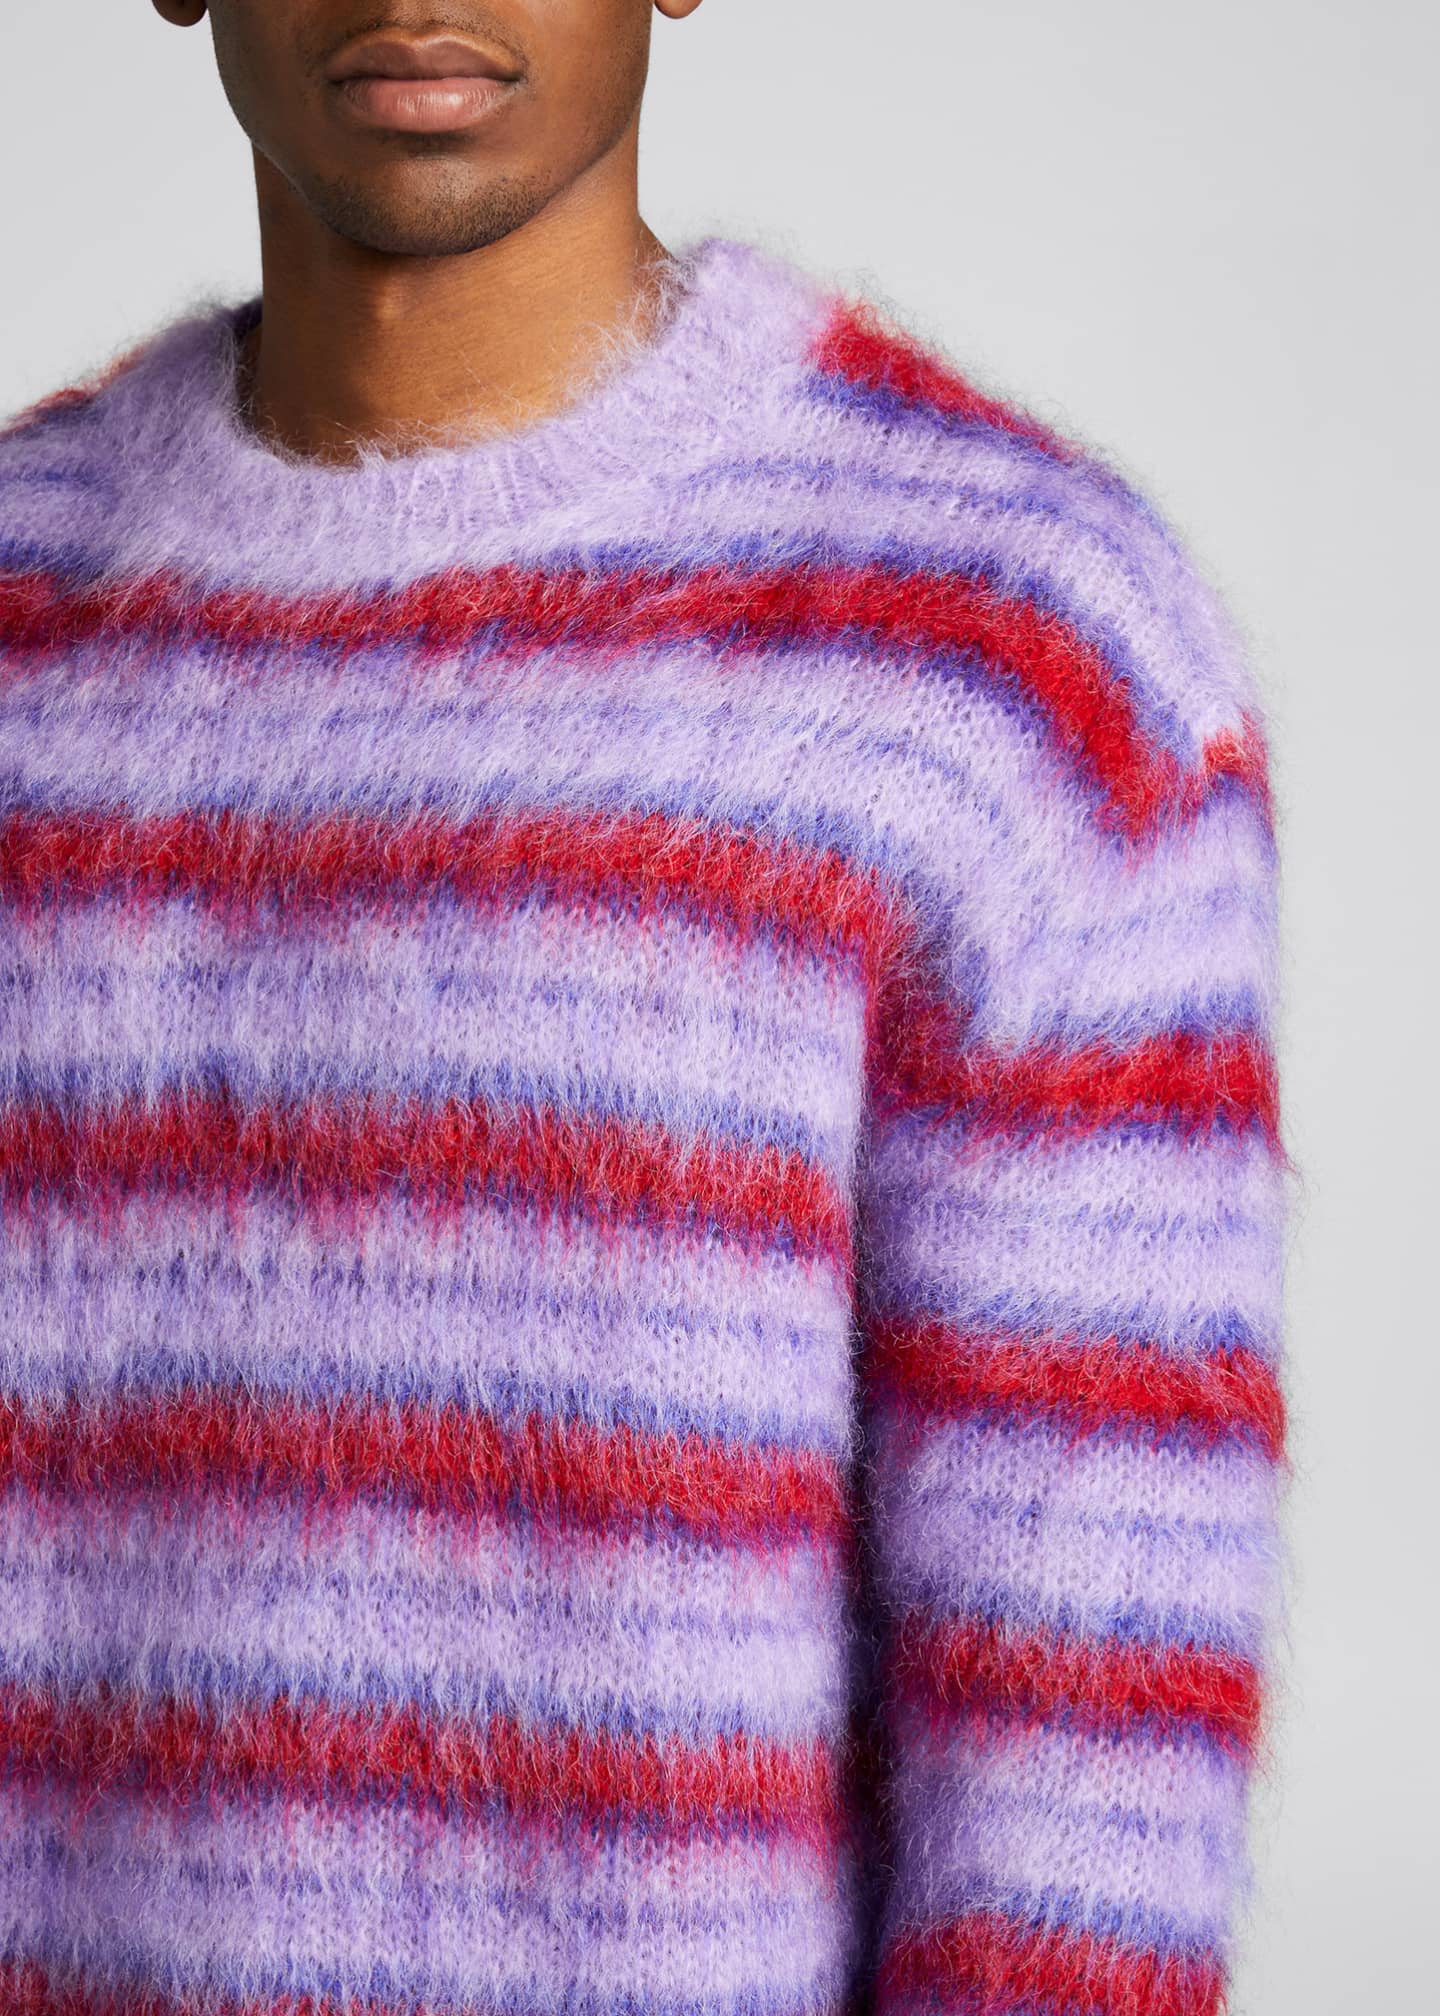 Marni Men's Striped Mohair Sweater - Bergdorf Goodman